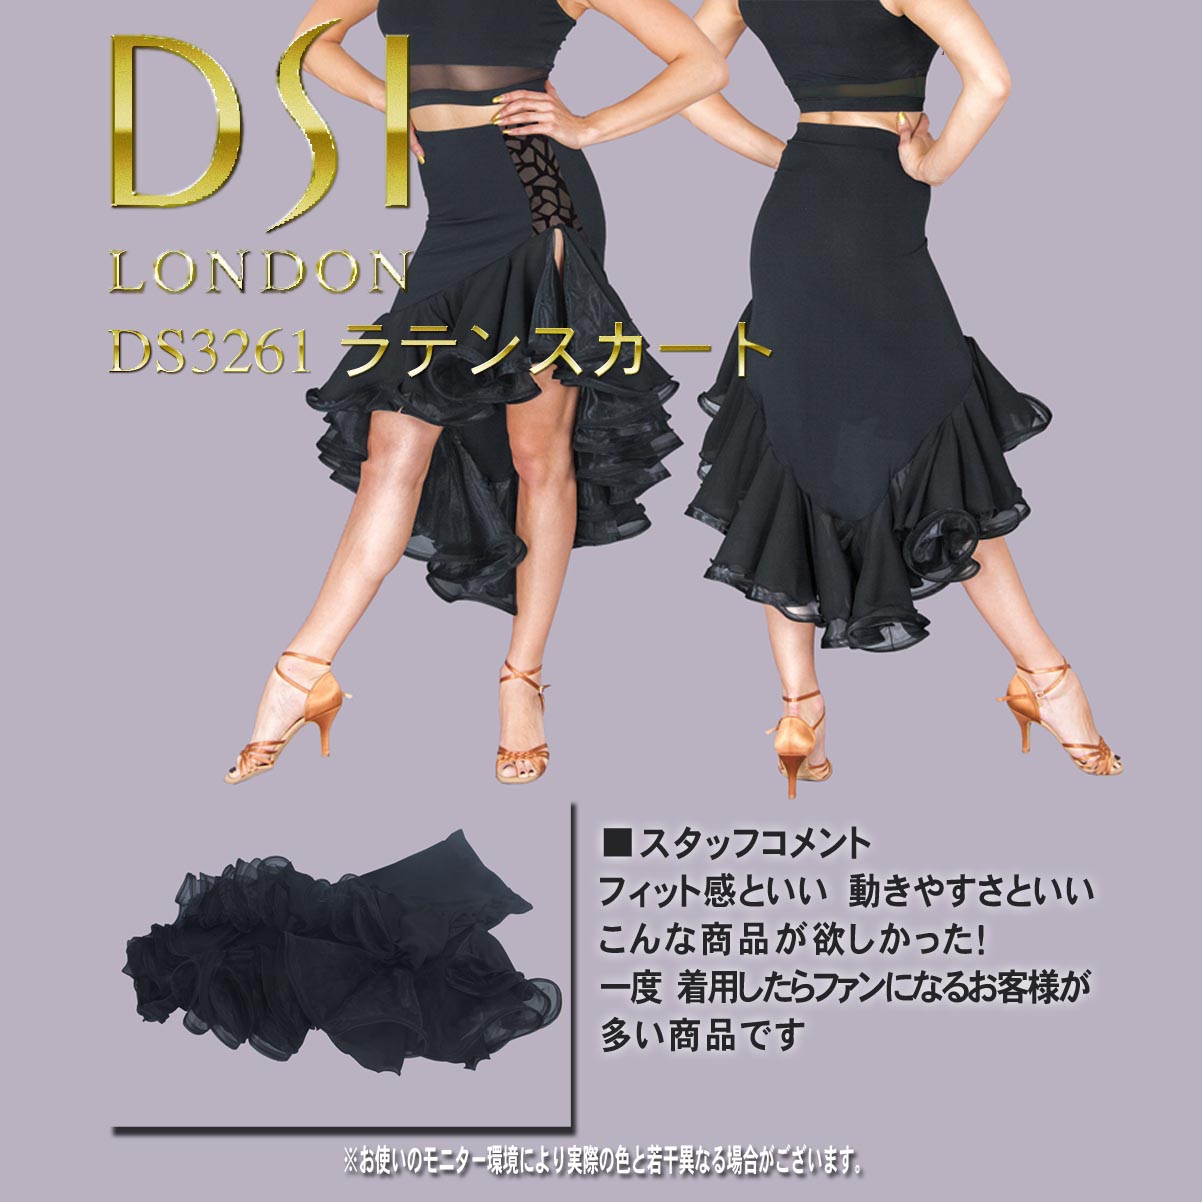 DSI 3261 Julianna skirt